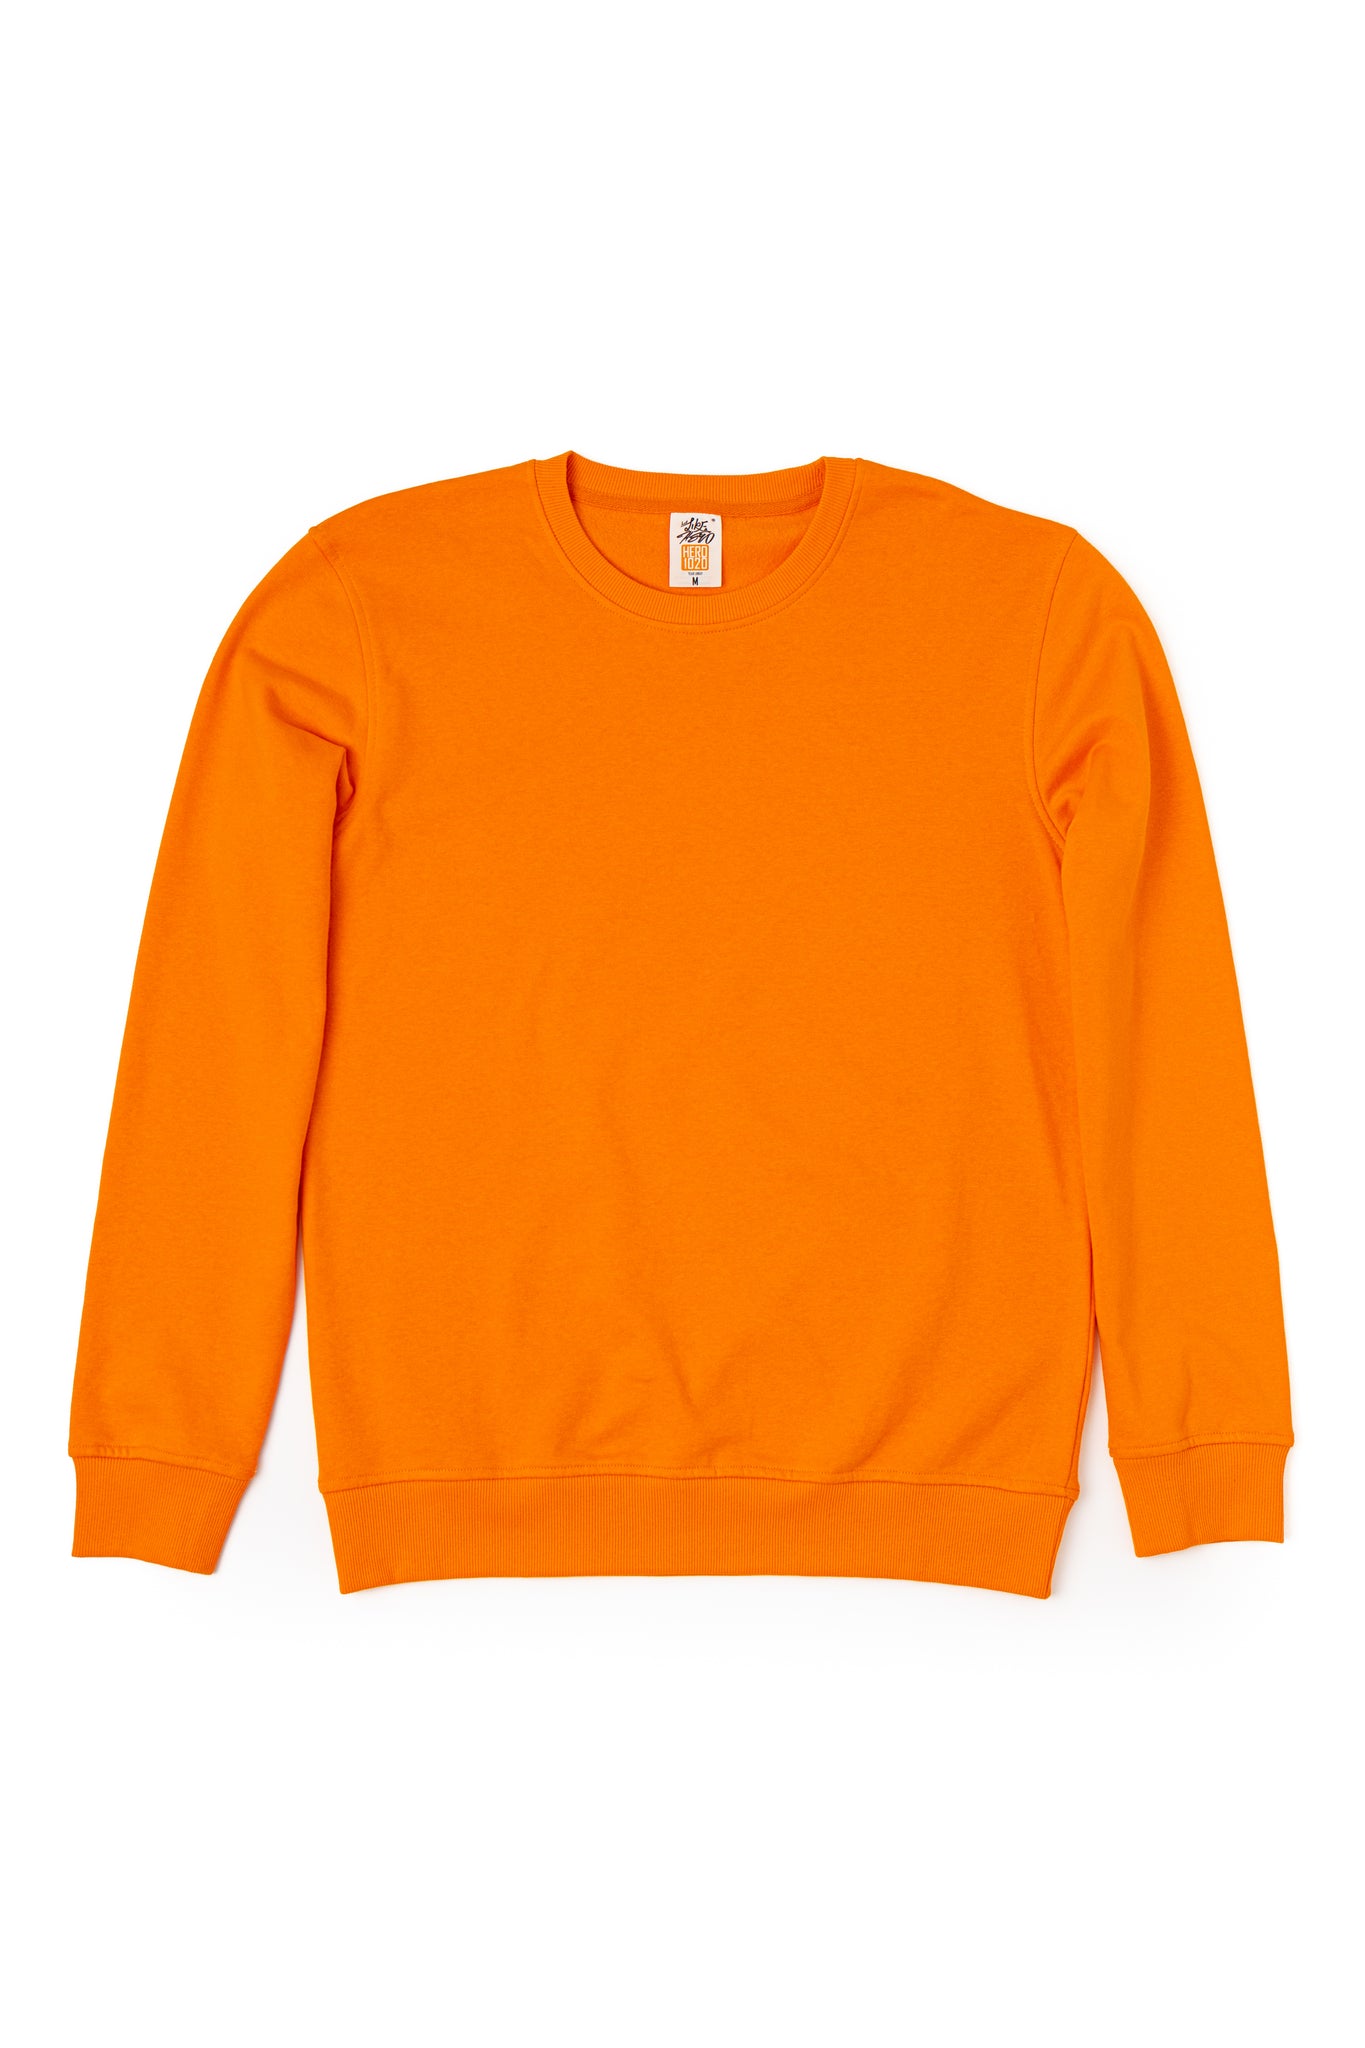 HERO-1020 Unisex Youth Blank Crewneck Sweatshirt - Orange